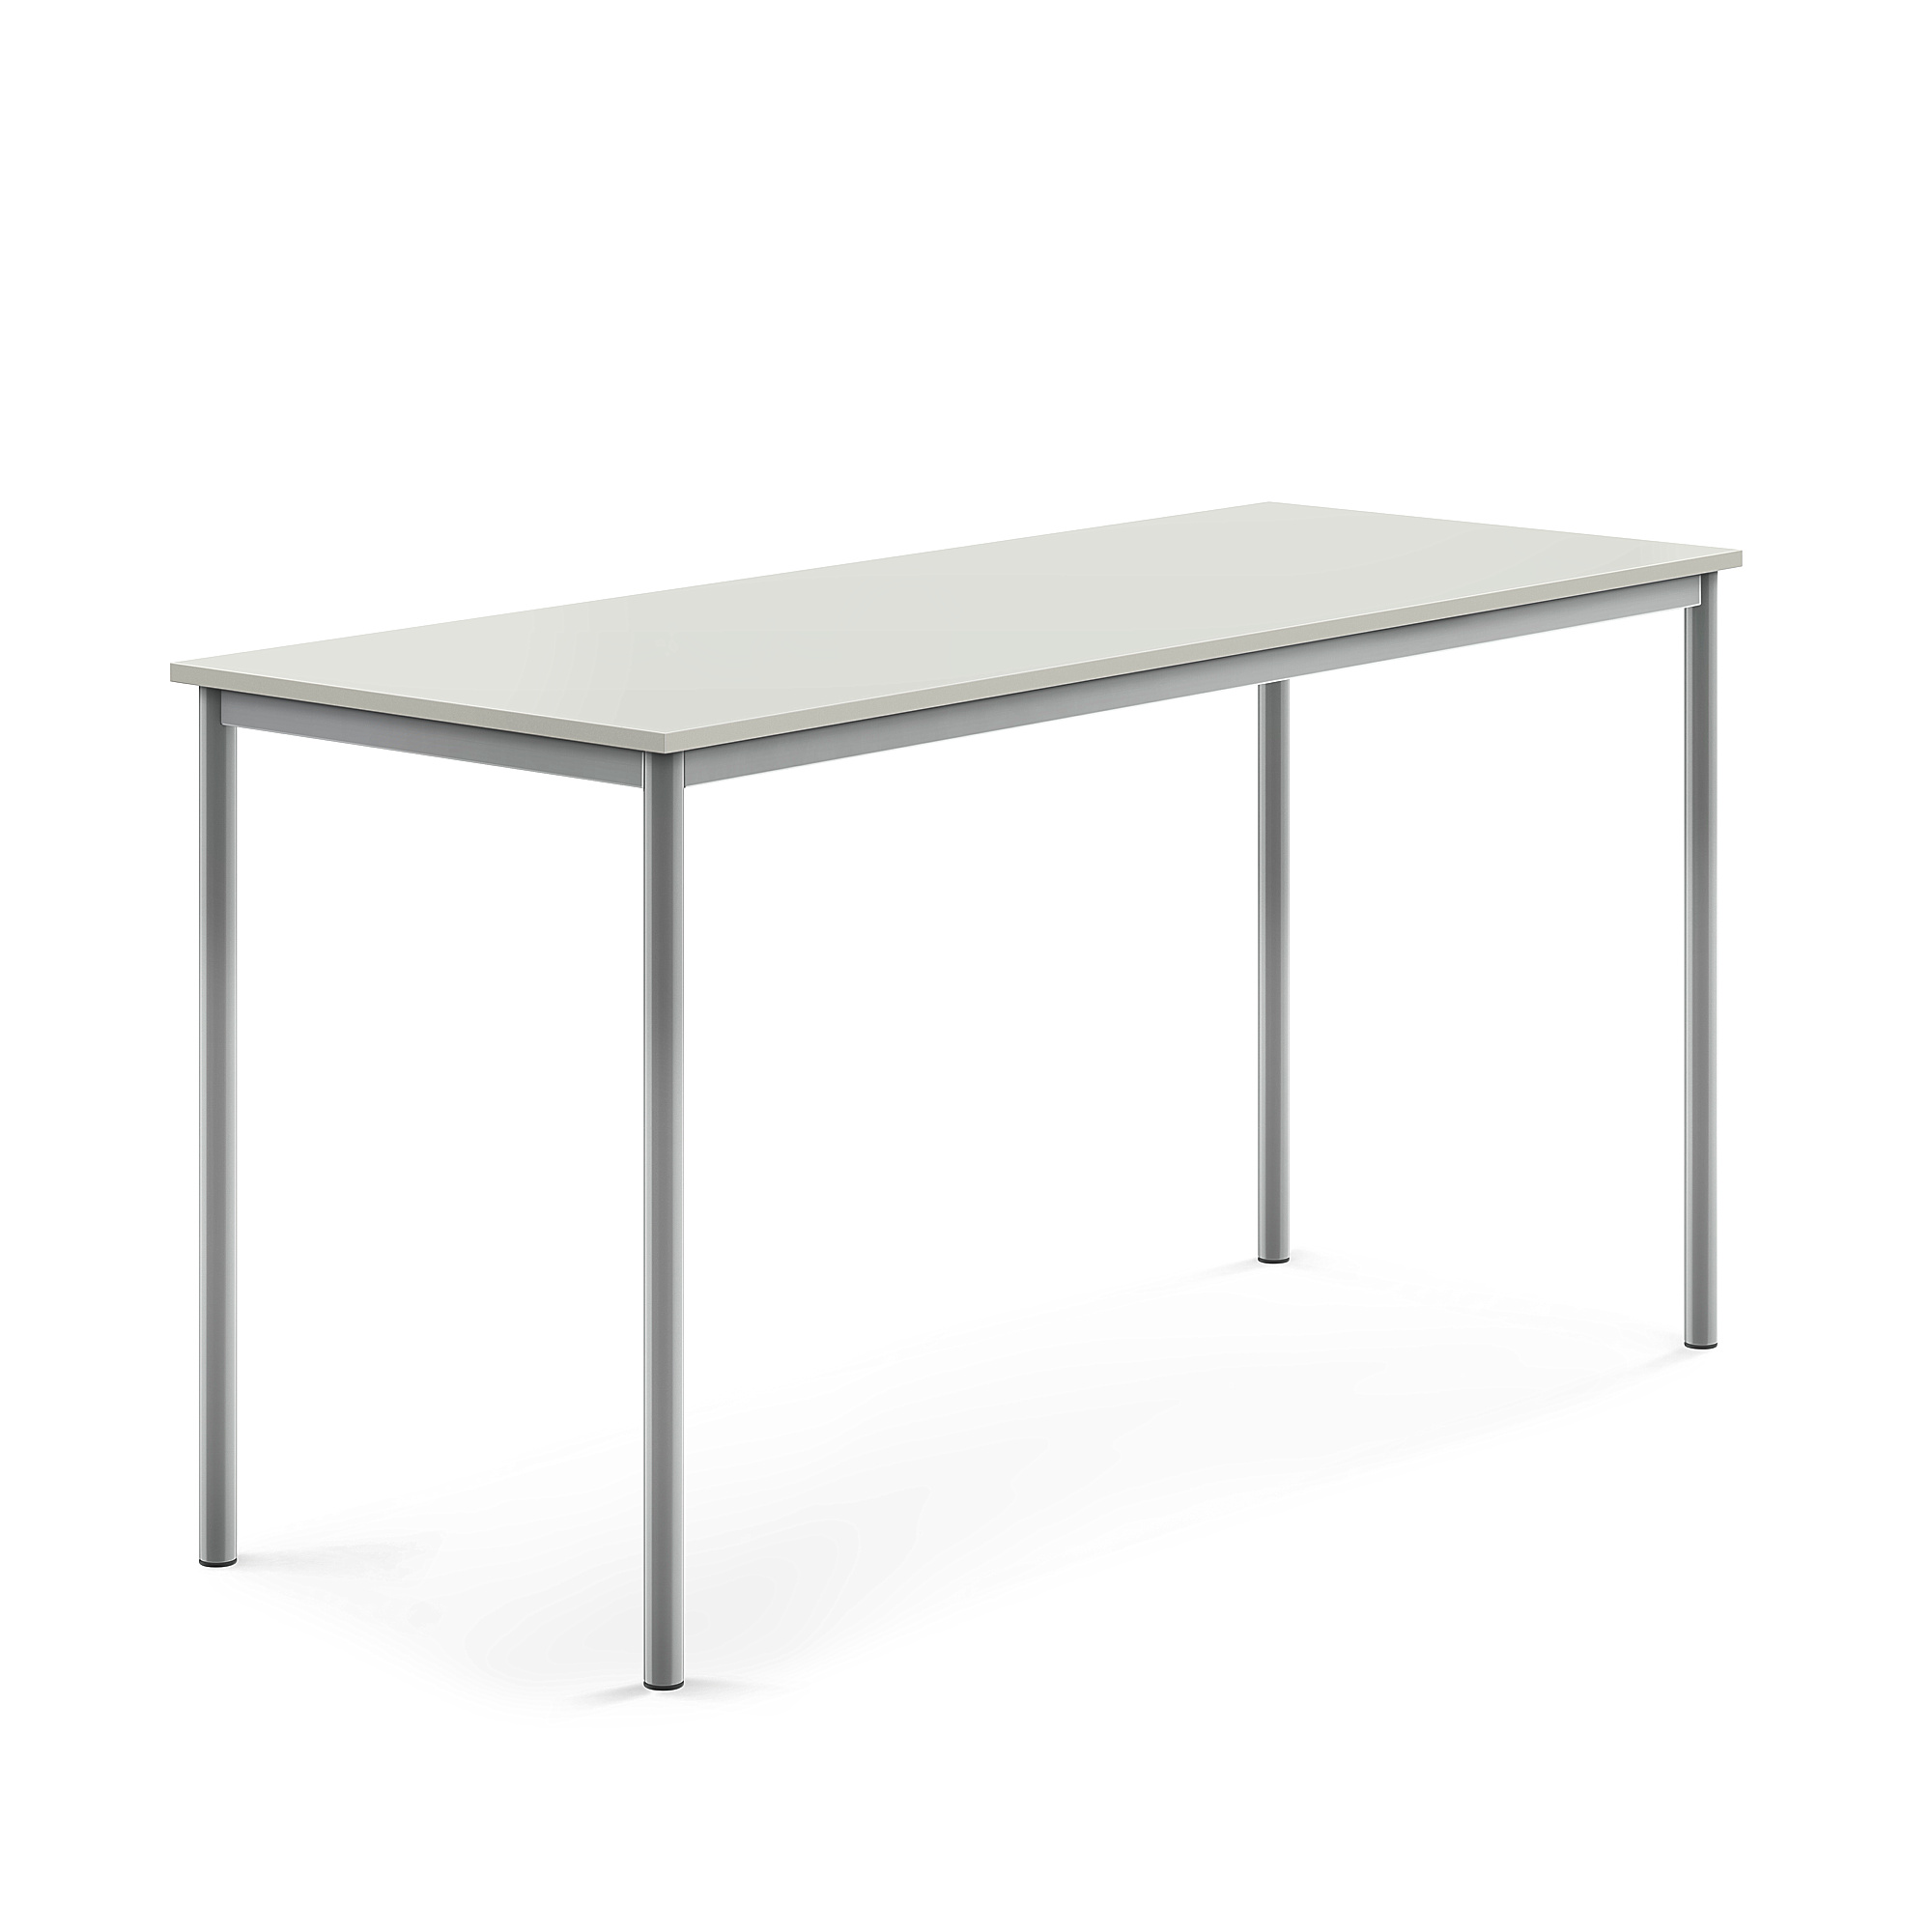 Stůl SONITUS, 1800x700x900 mm, stříbrné nohy, HPL deska tlumící hluk, šedá